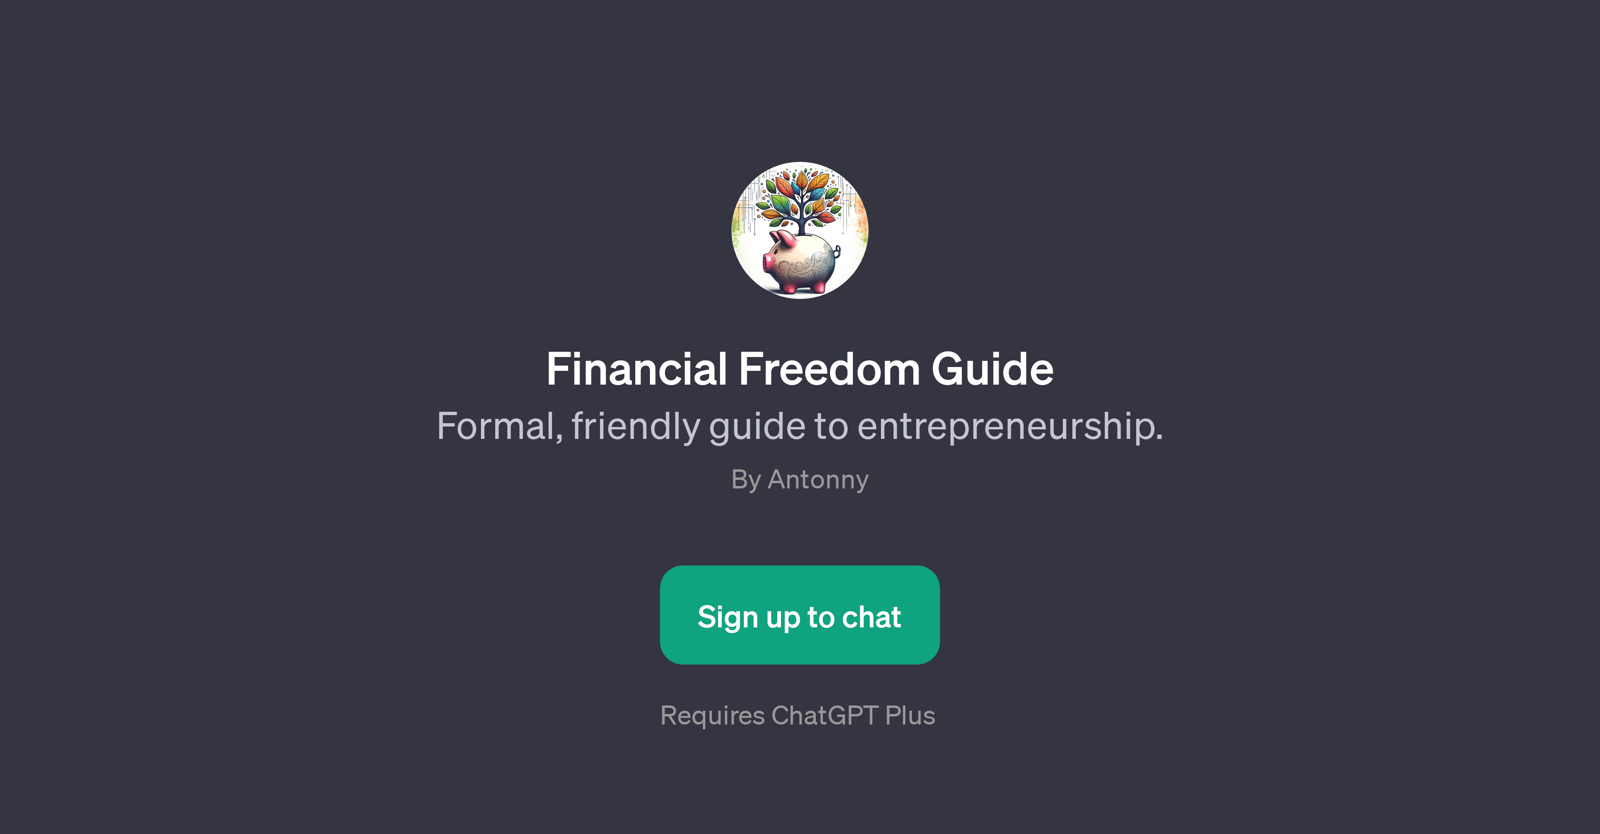 Financial Freedom Guide website